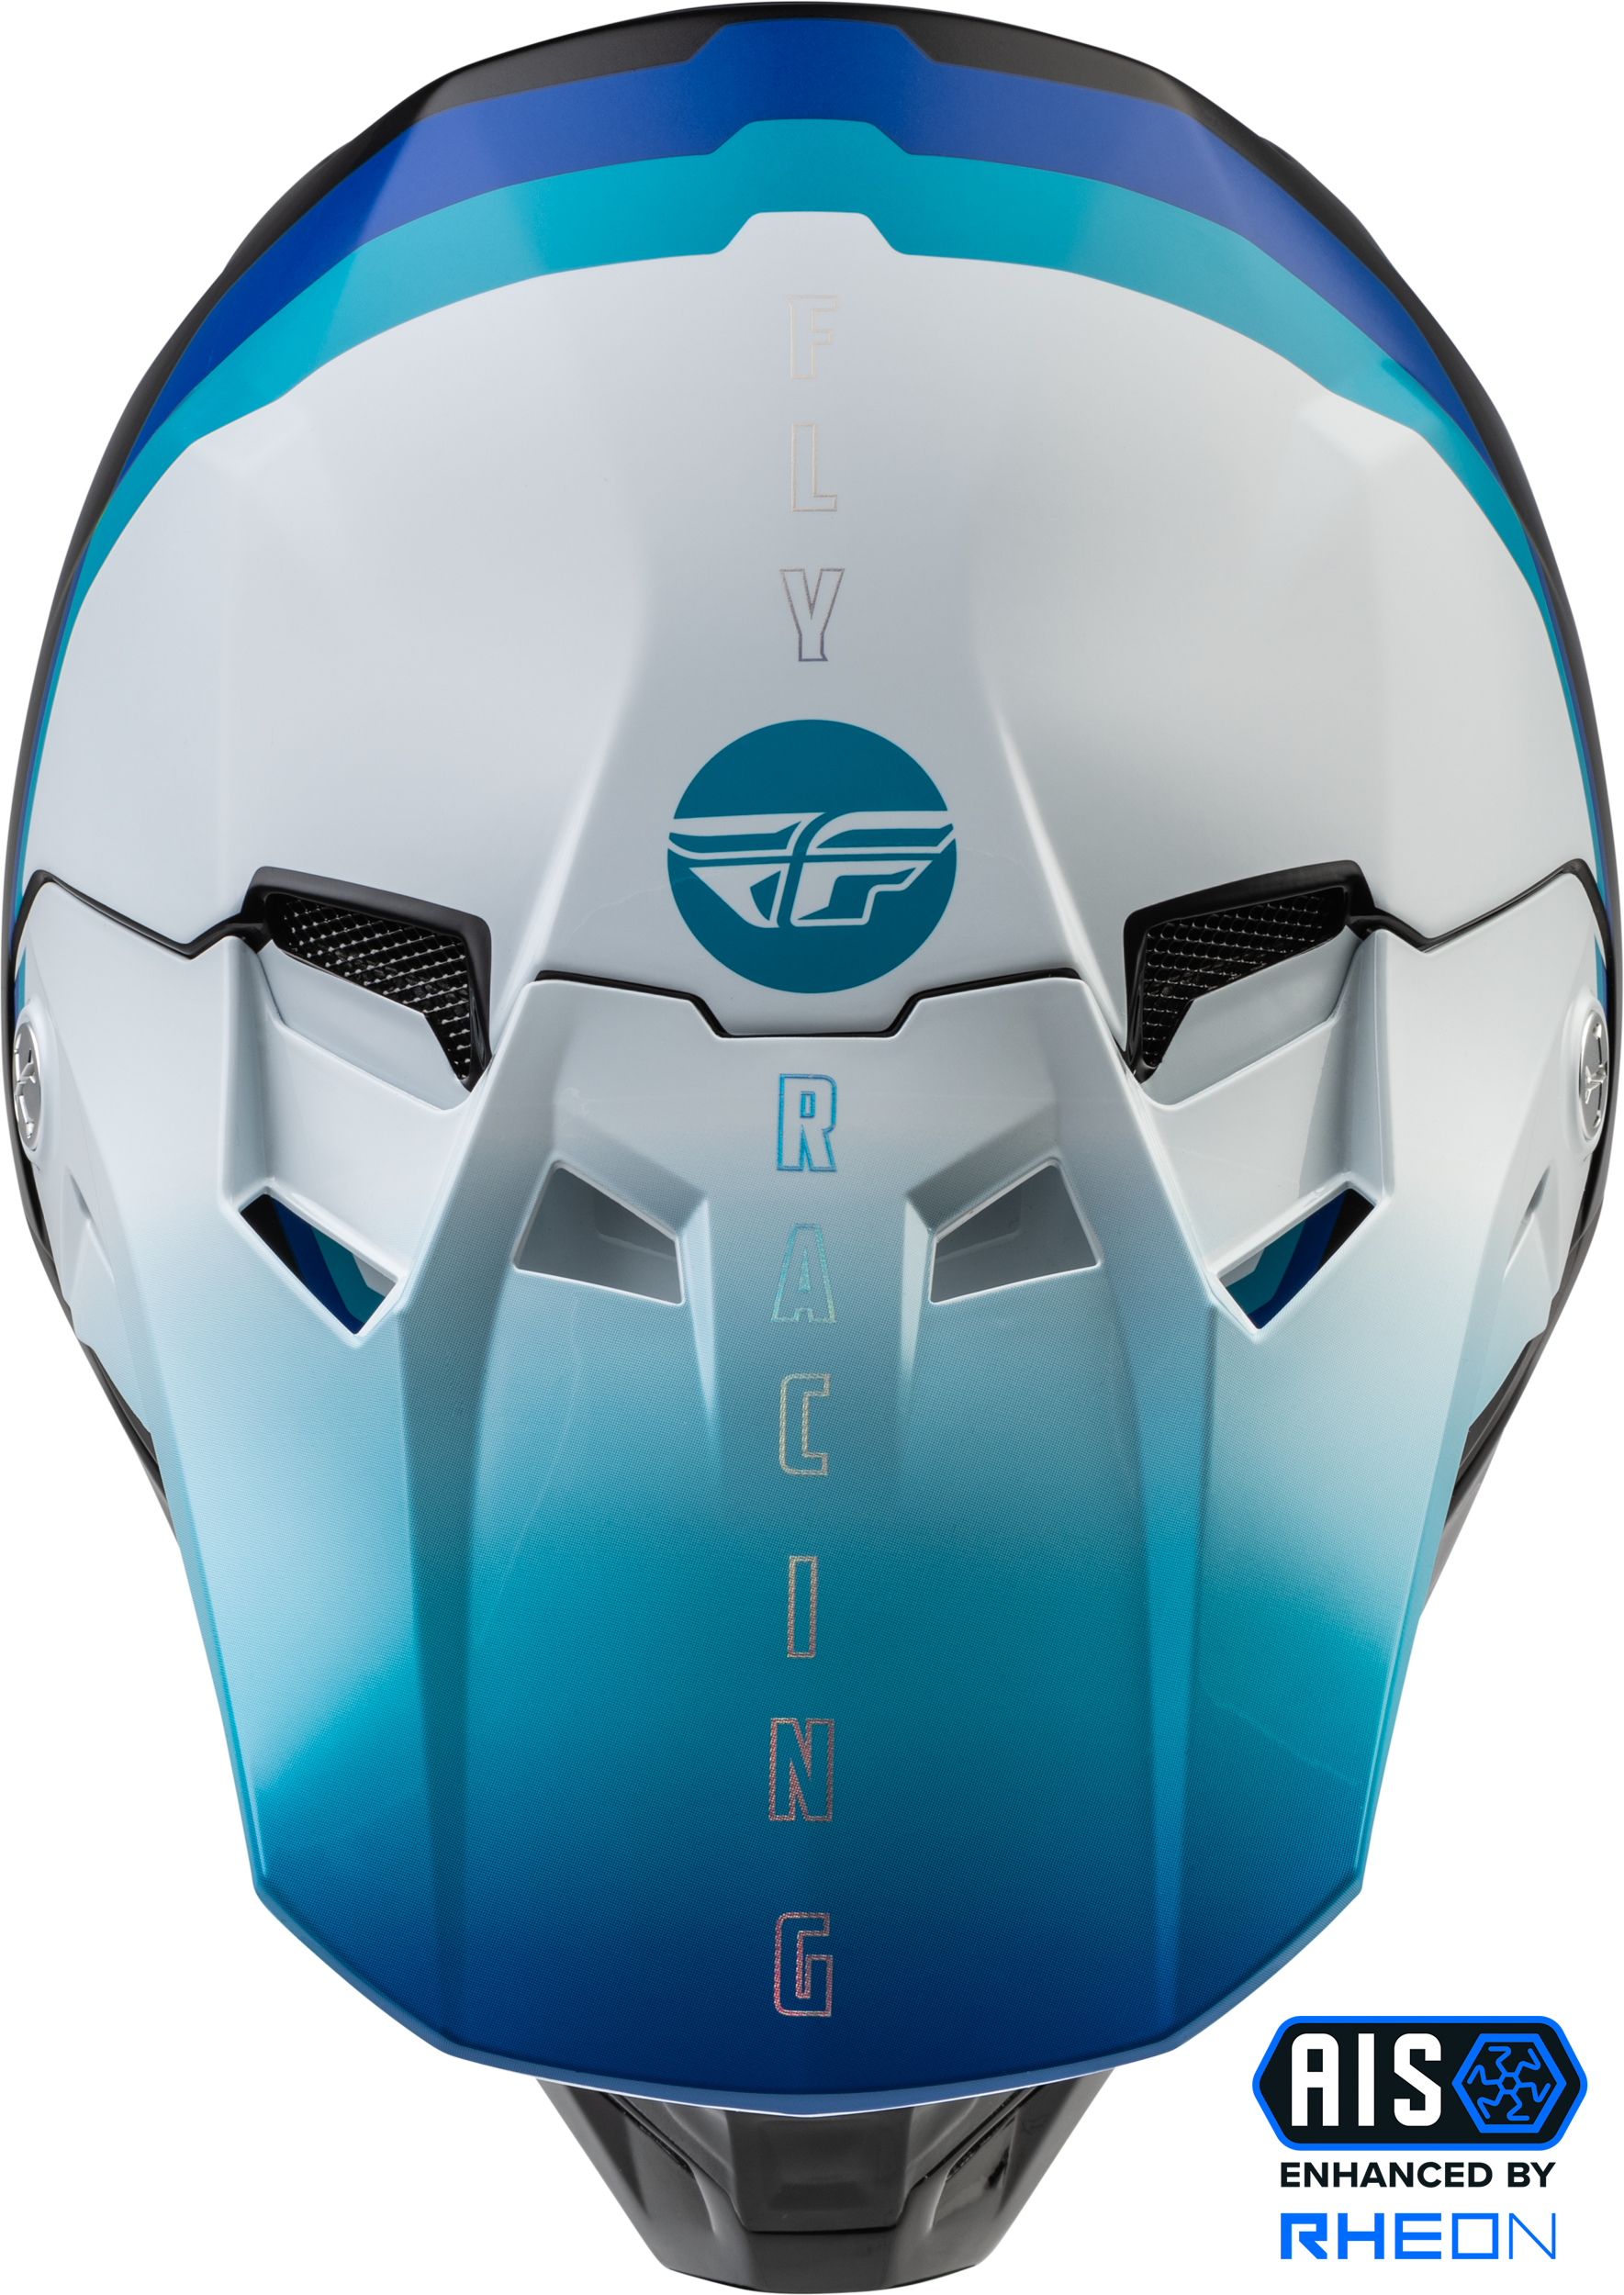 Formula Cc Driver Helmet Black/Blue/White Lg